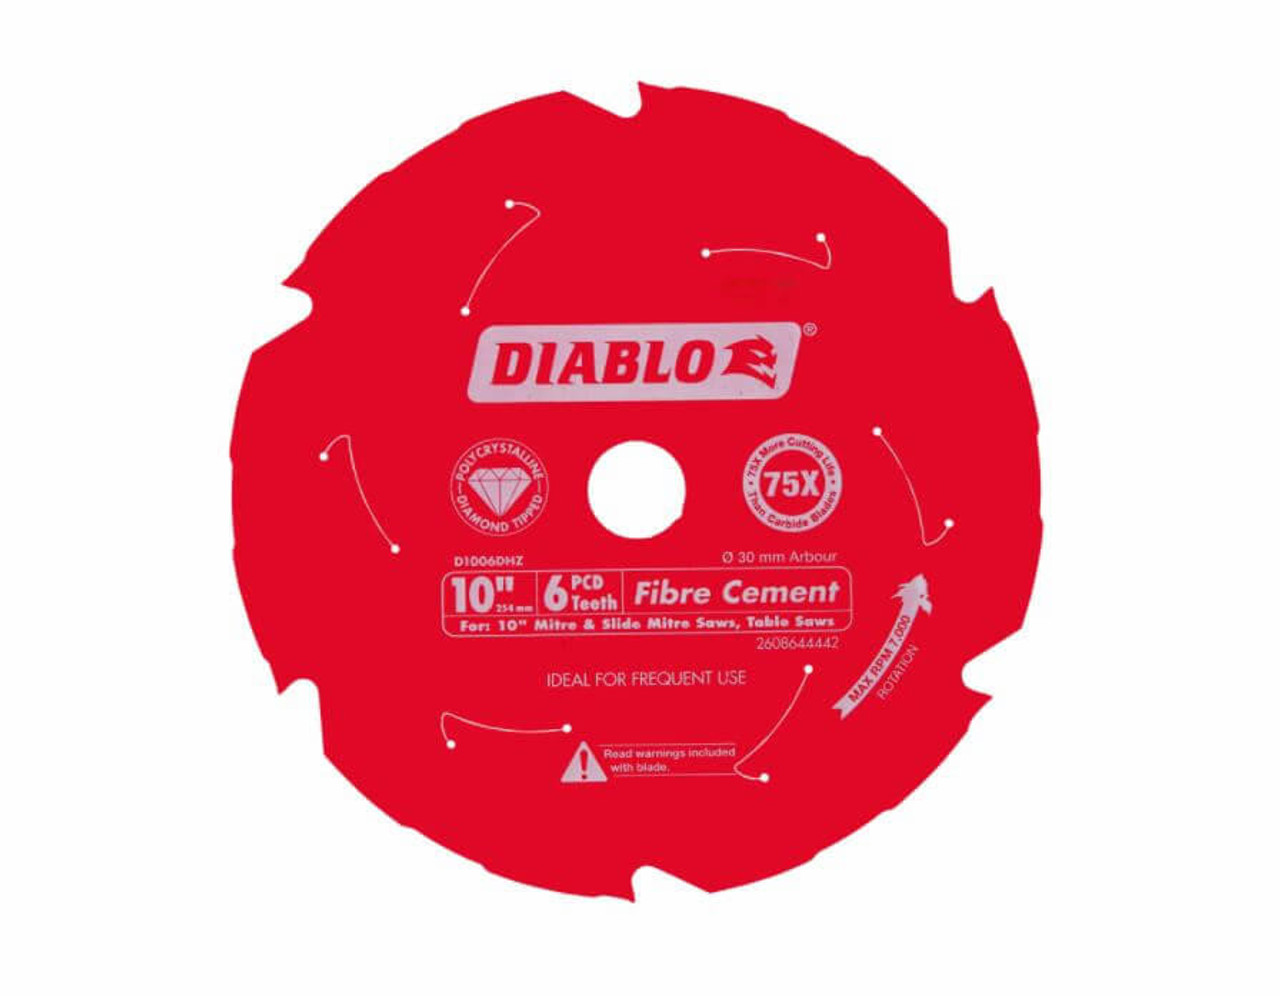 Diablo 254MM Fibre Cement Blade 2608644442